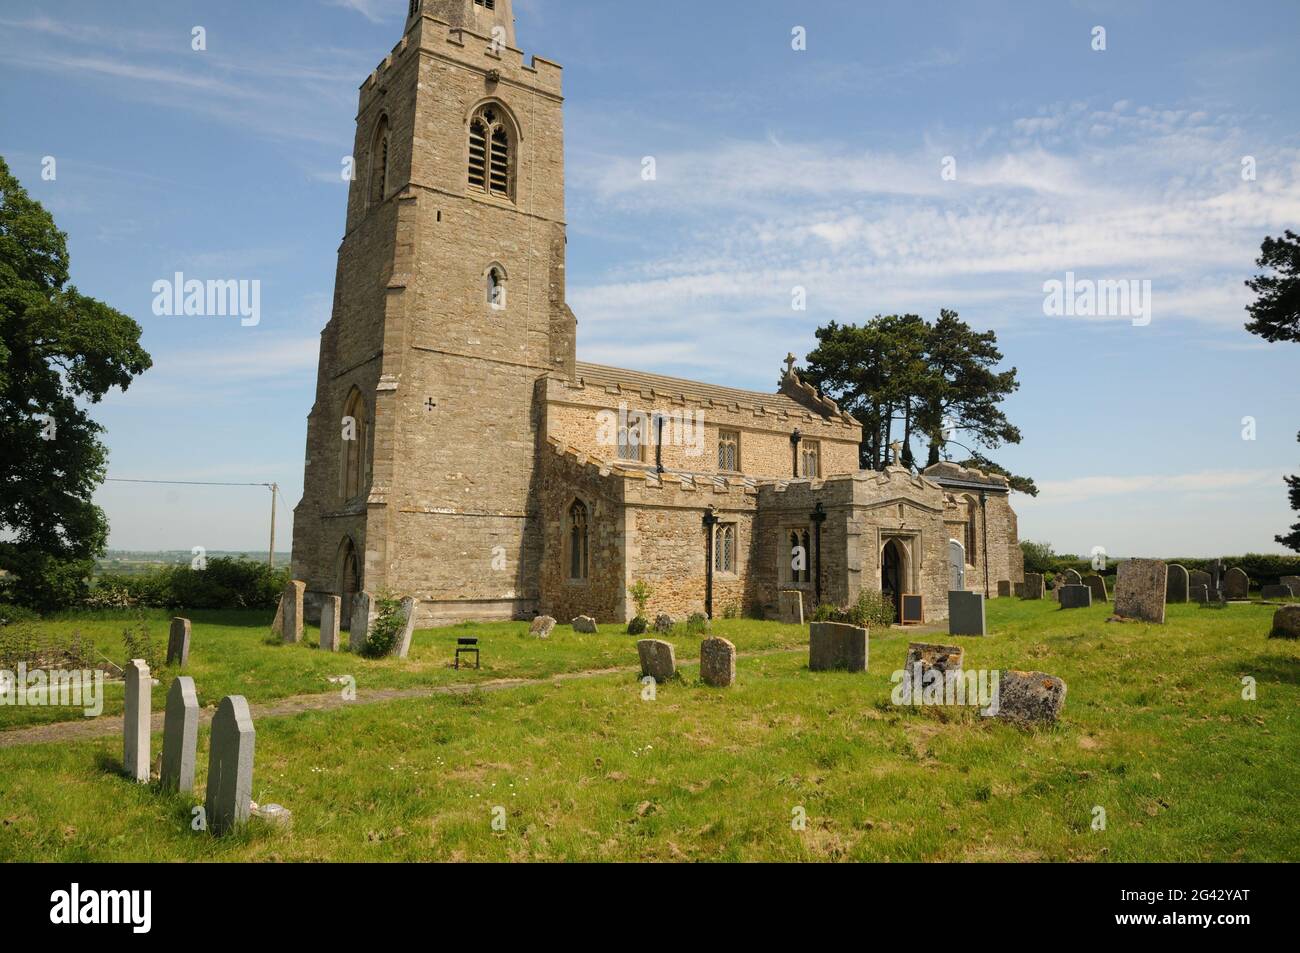 All Saints Church, Little Staughton, Bedfordshire Stock Photo